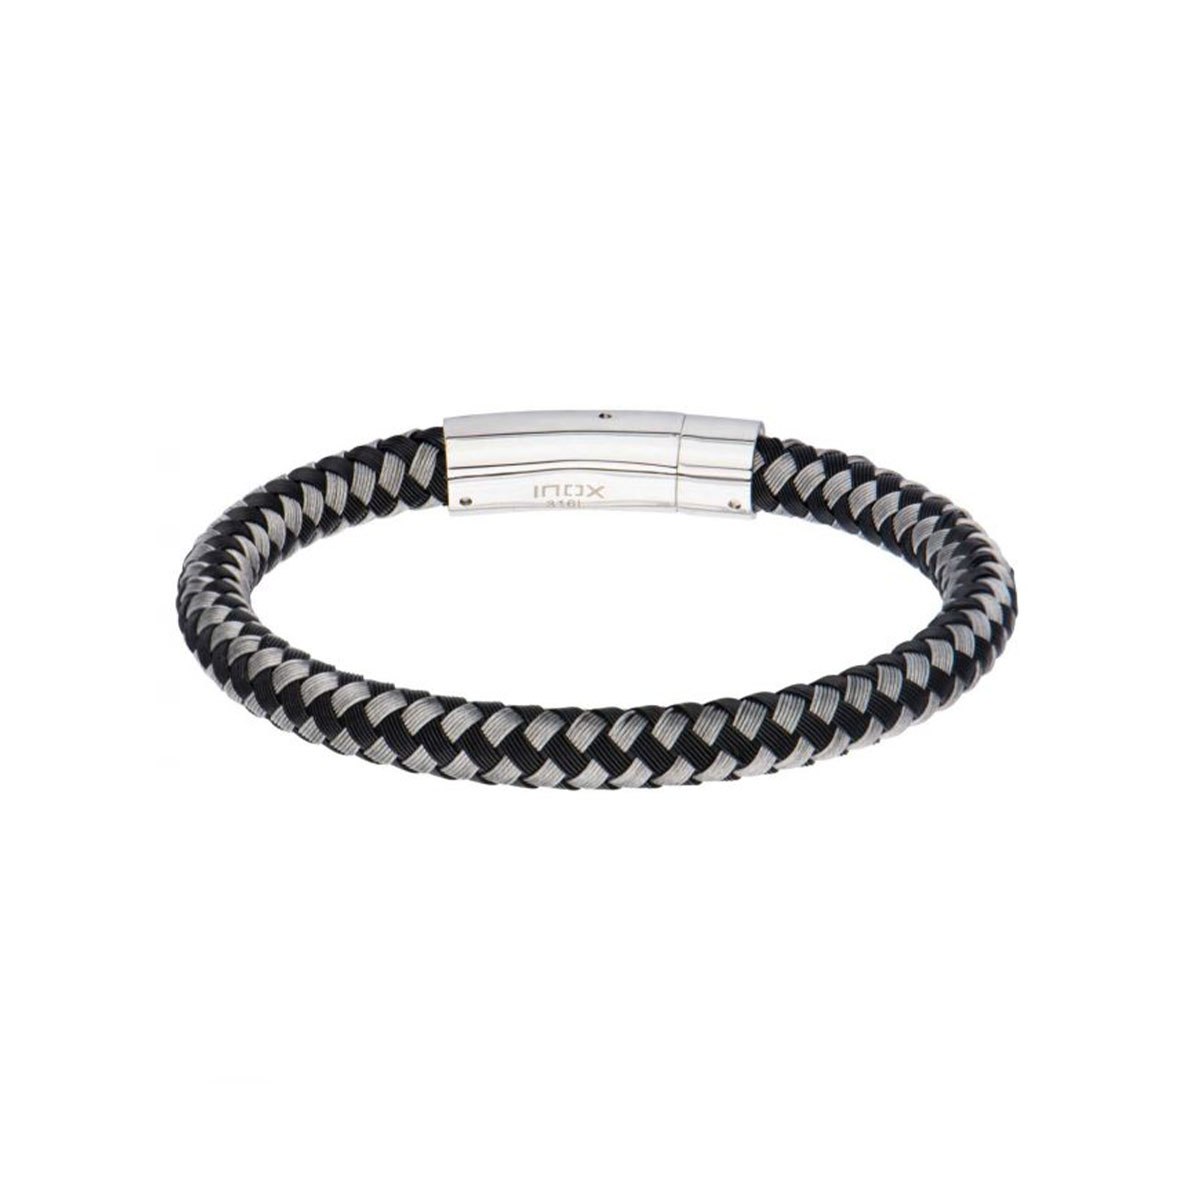 Stainless Steel Black and White Braided Bracelet